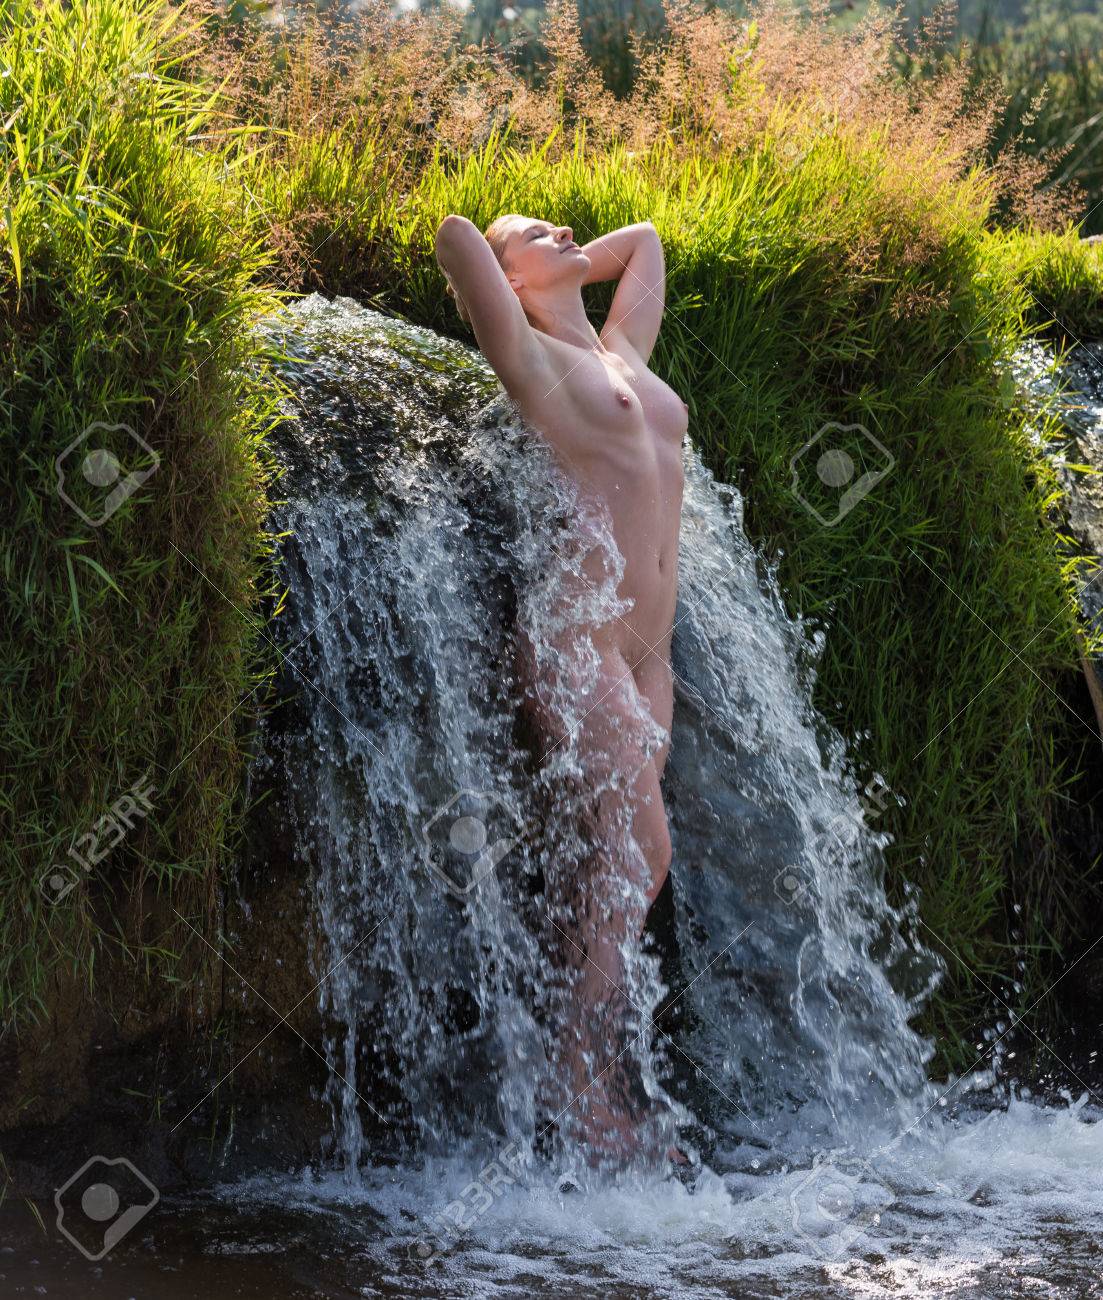 Nude waterfall naked girl